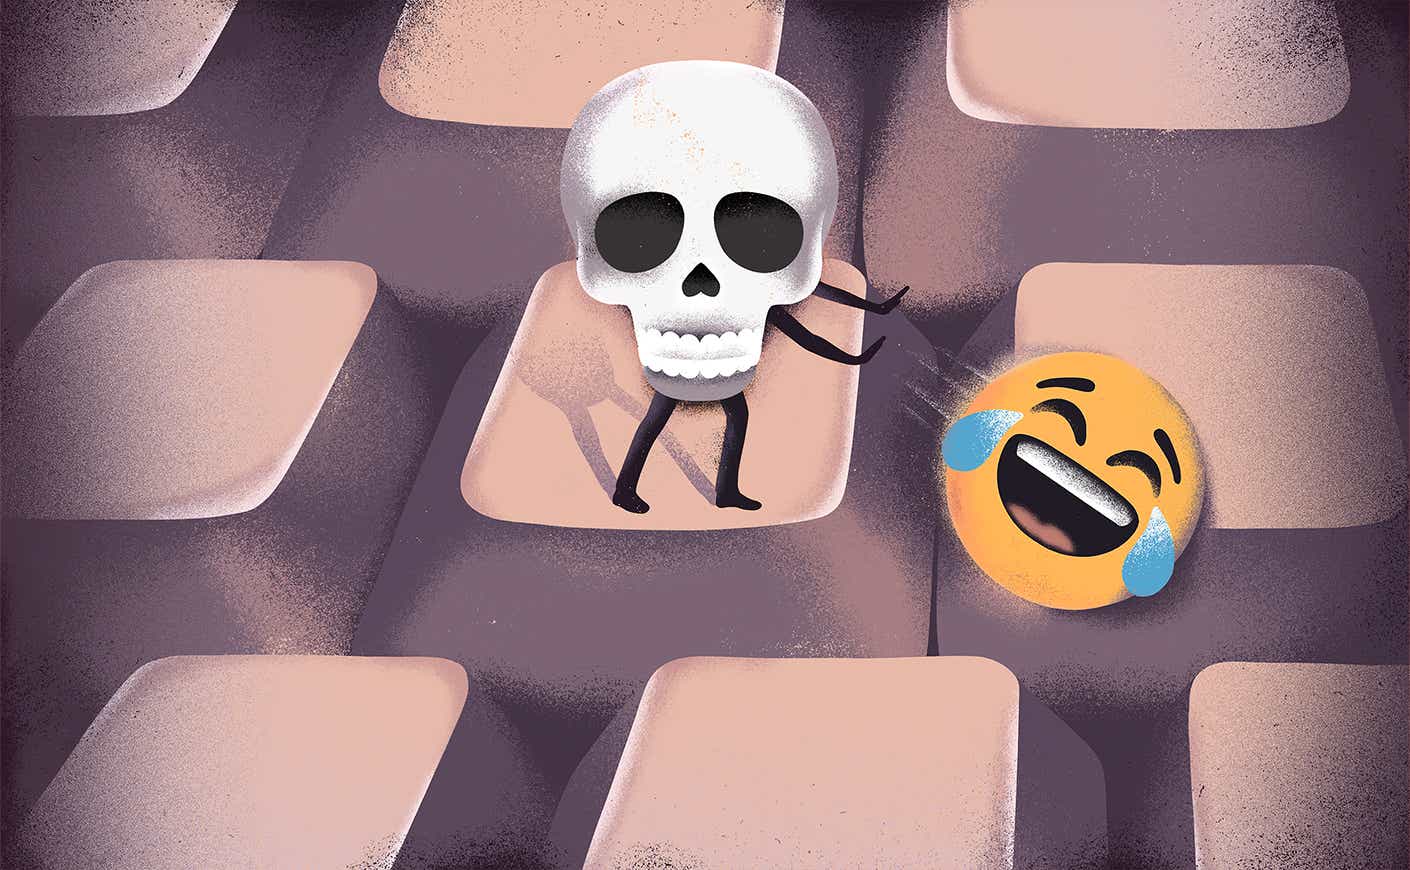 Crying laughing emoji getting pushed off keyboard by skull emoji